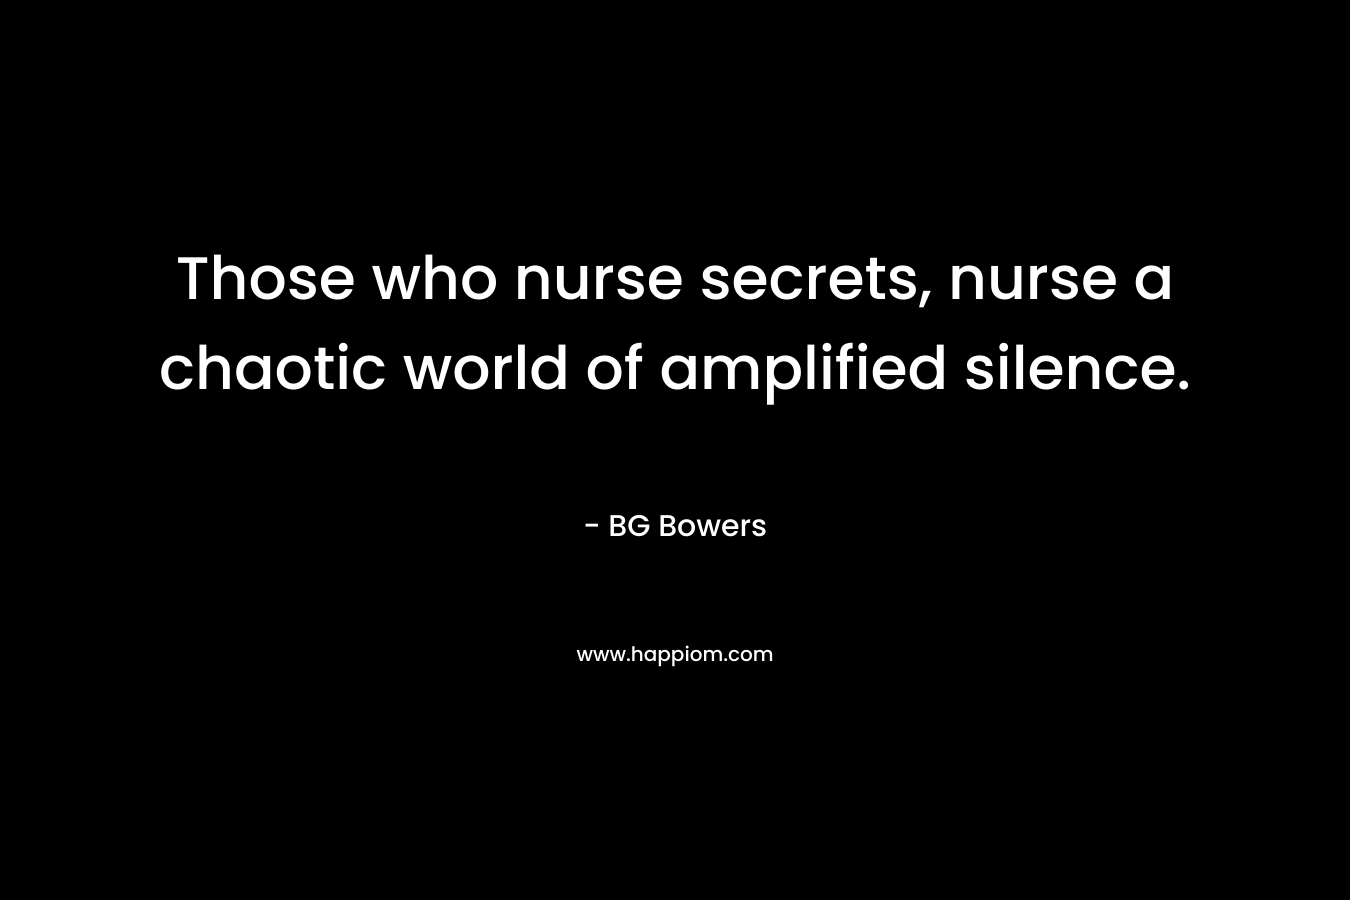 Those who nurse secrets, nurse a chaotic world of amplified silence.